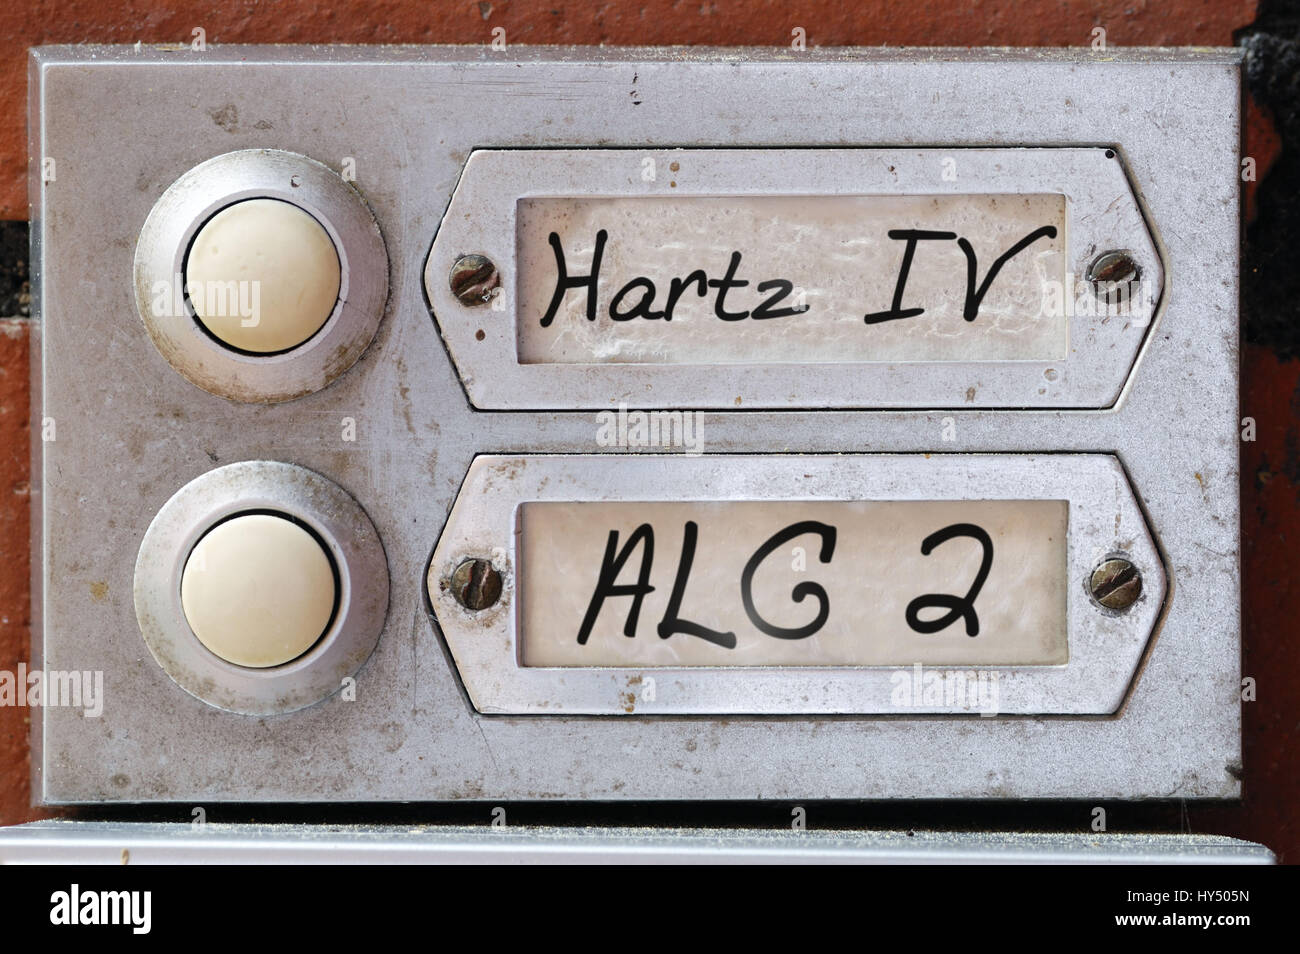 Segno di campana con l'etichetta Hartz IV e ALG 2, Klingelschild mit der Aufschrift Hartz IV und ALG 2 Foto Stock